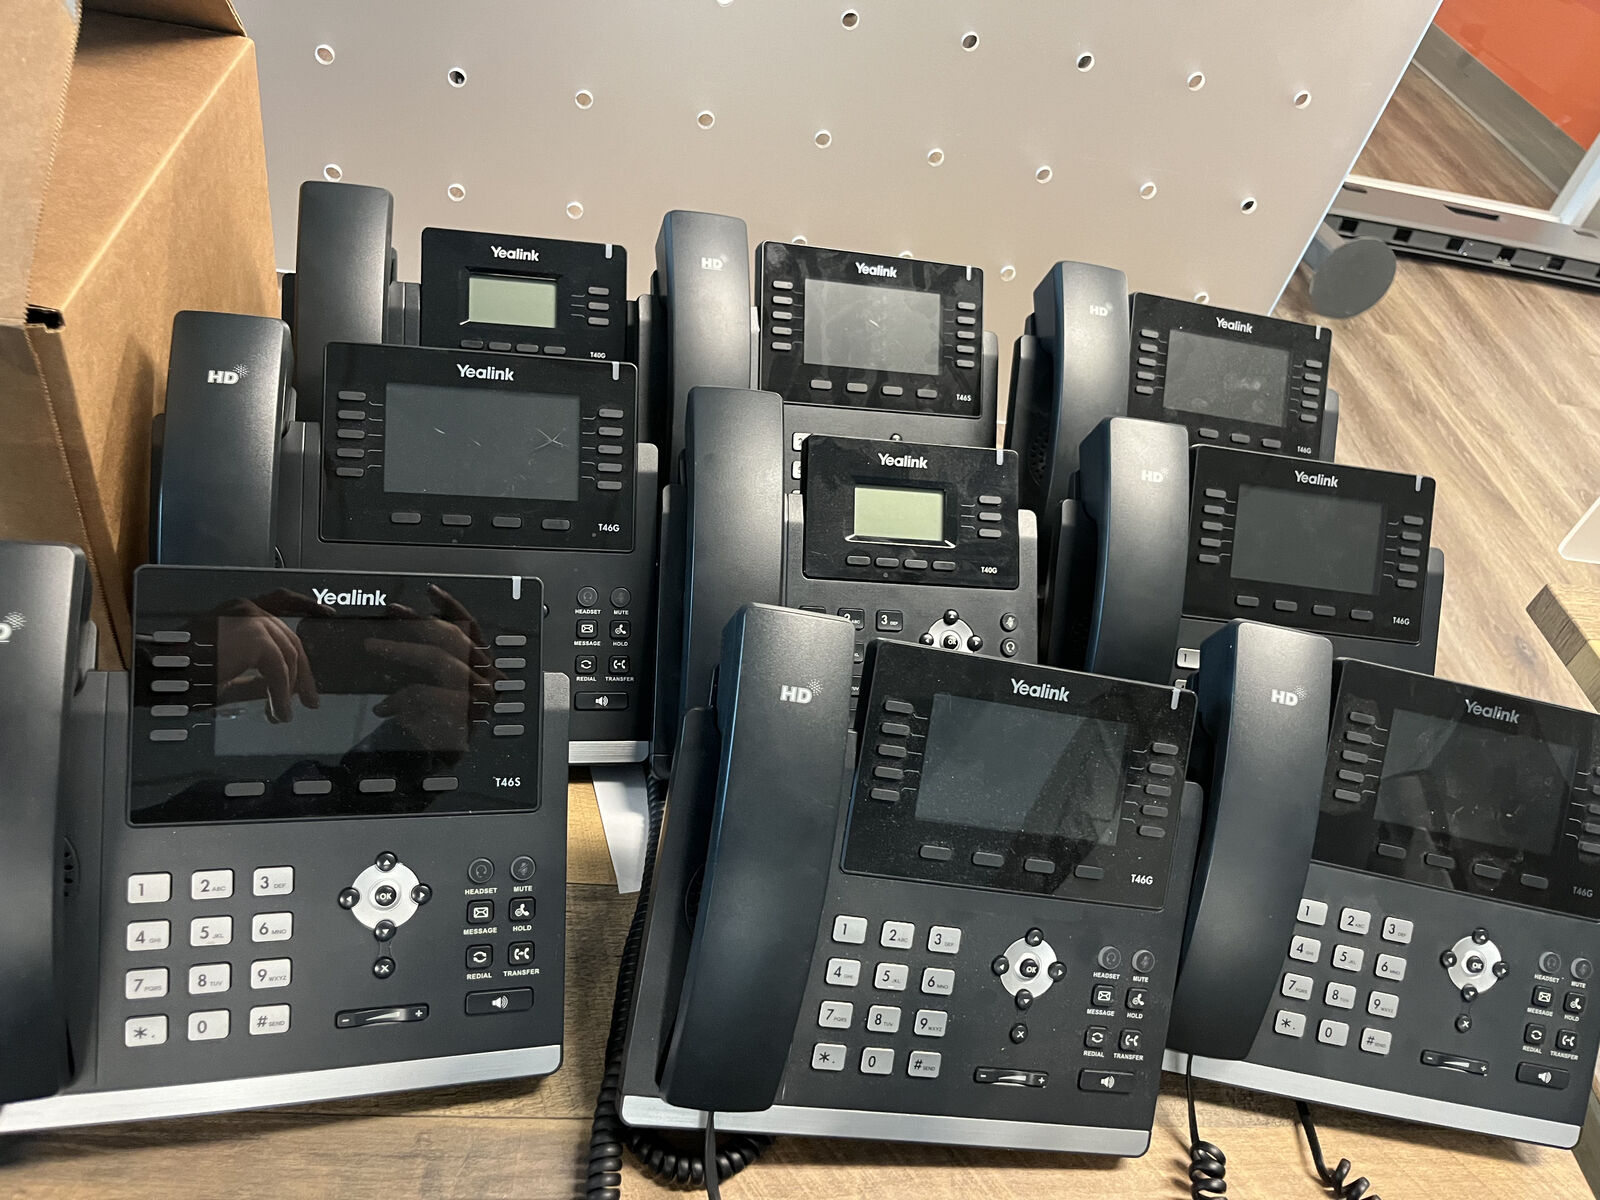 Yealink Phones (SIP-T46G) and Speaker-Phones. 18 Phones total, 2 Speaker-Phones